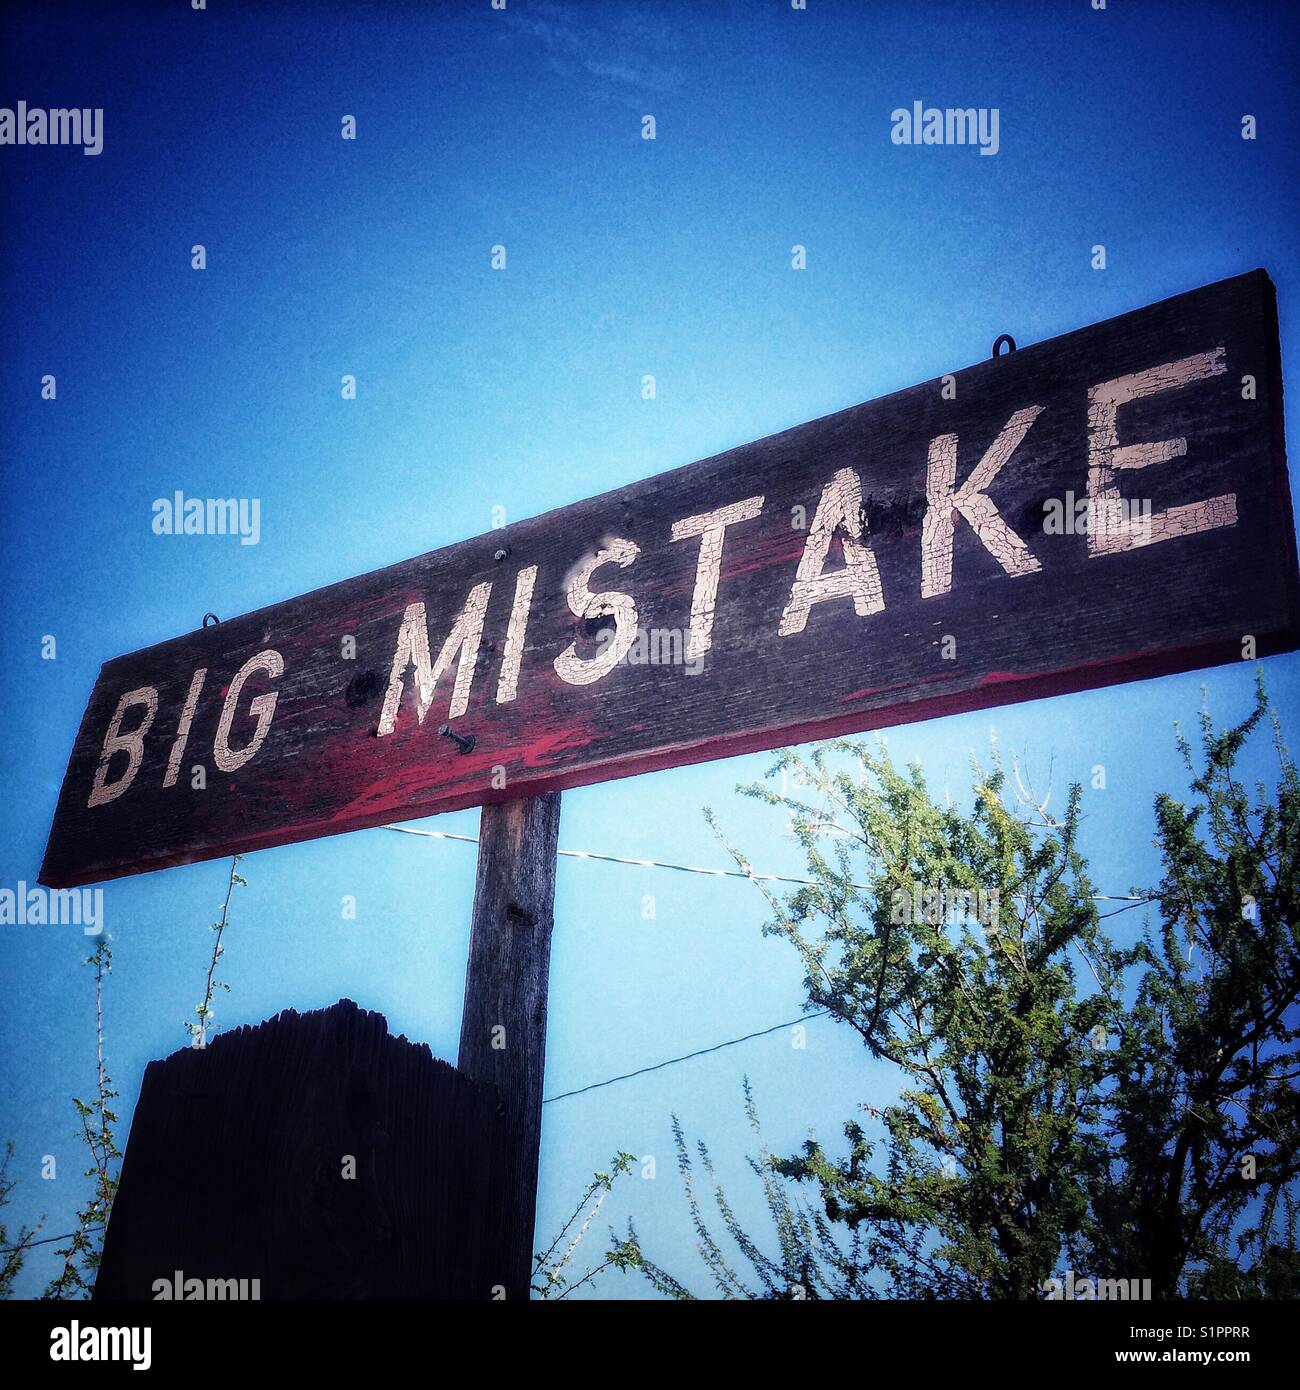 Big mistake signage in Hackberry, Arizona, USA Stock Photo